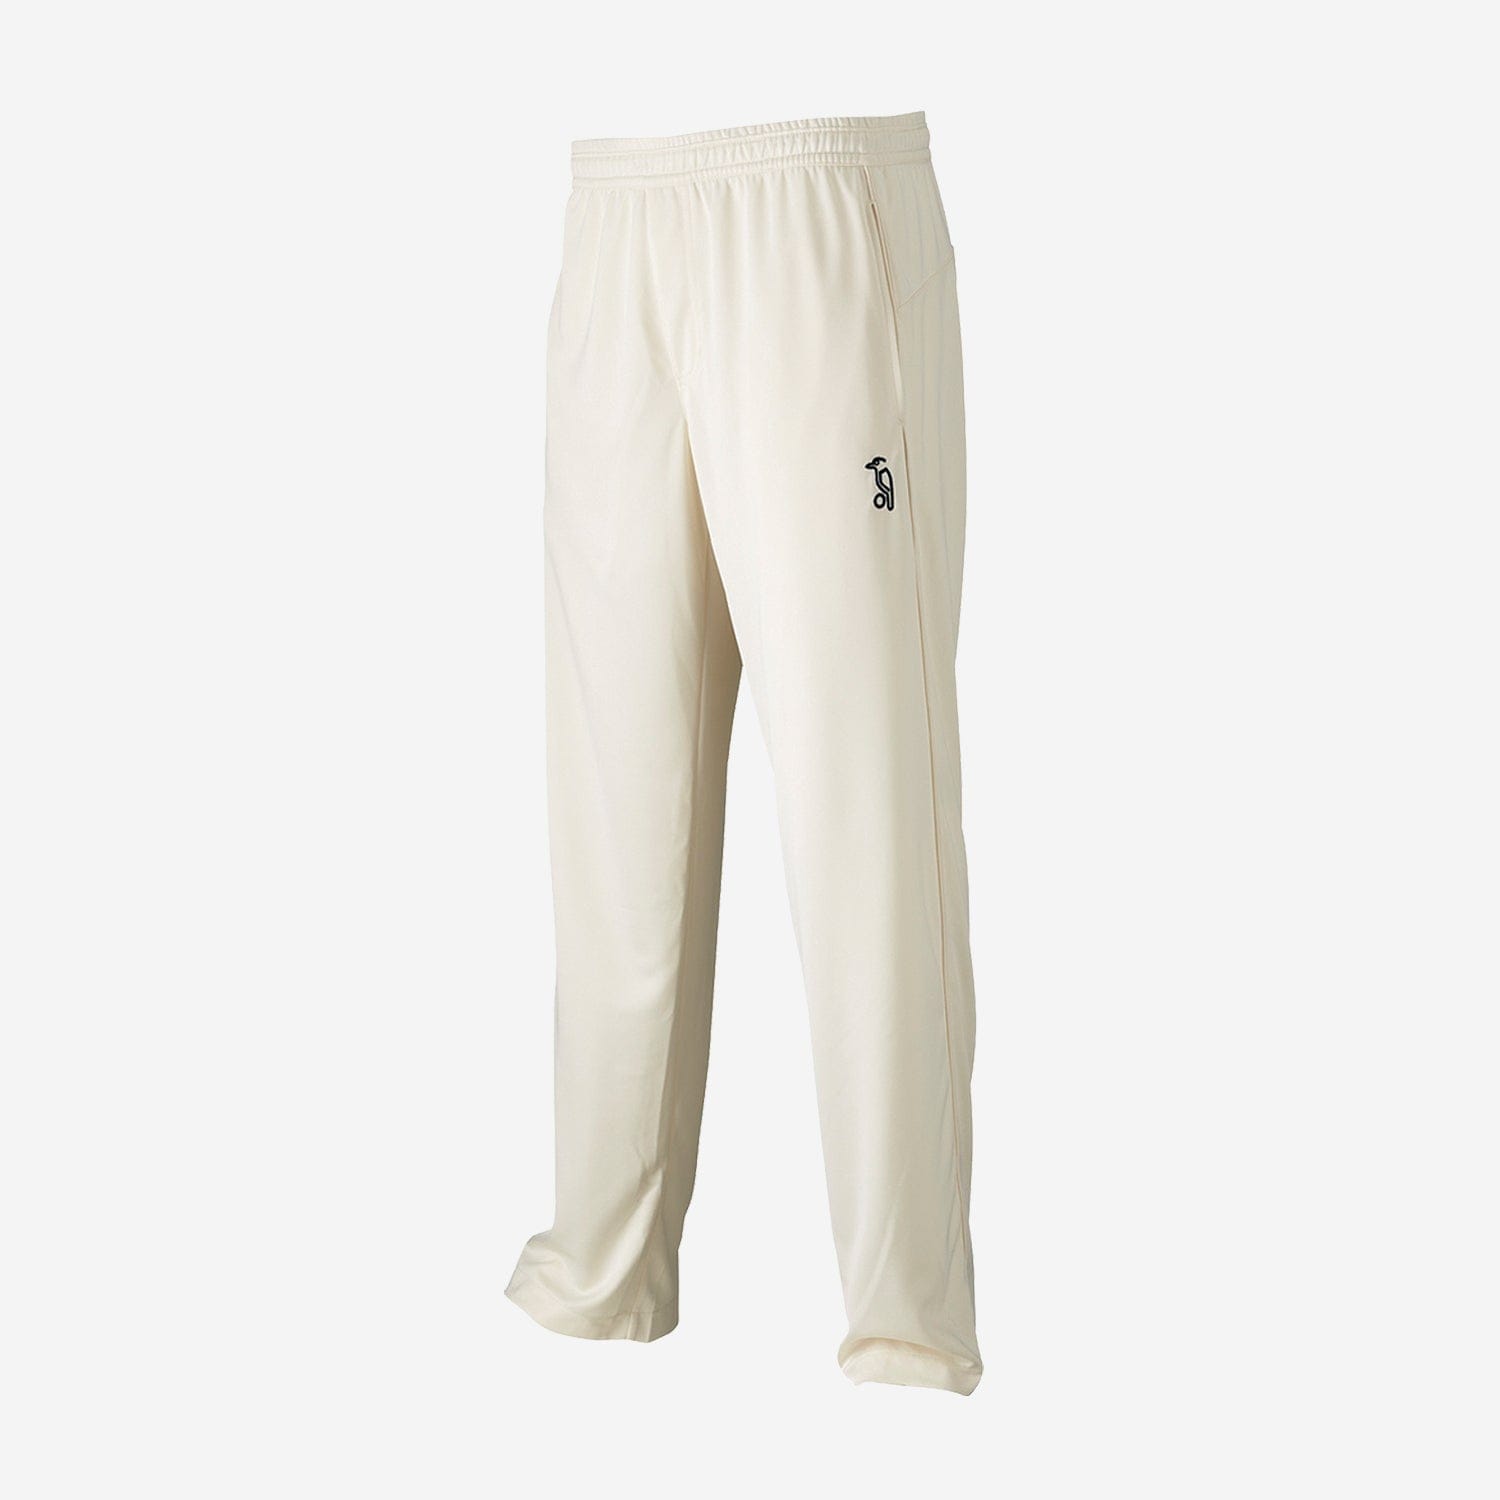 Kookaburra Clothing Small / Cream Kookaburra Pro Active Cricket Pants